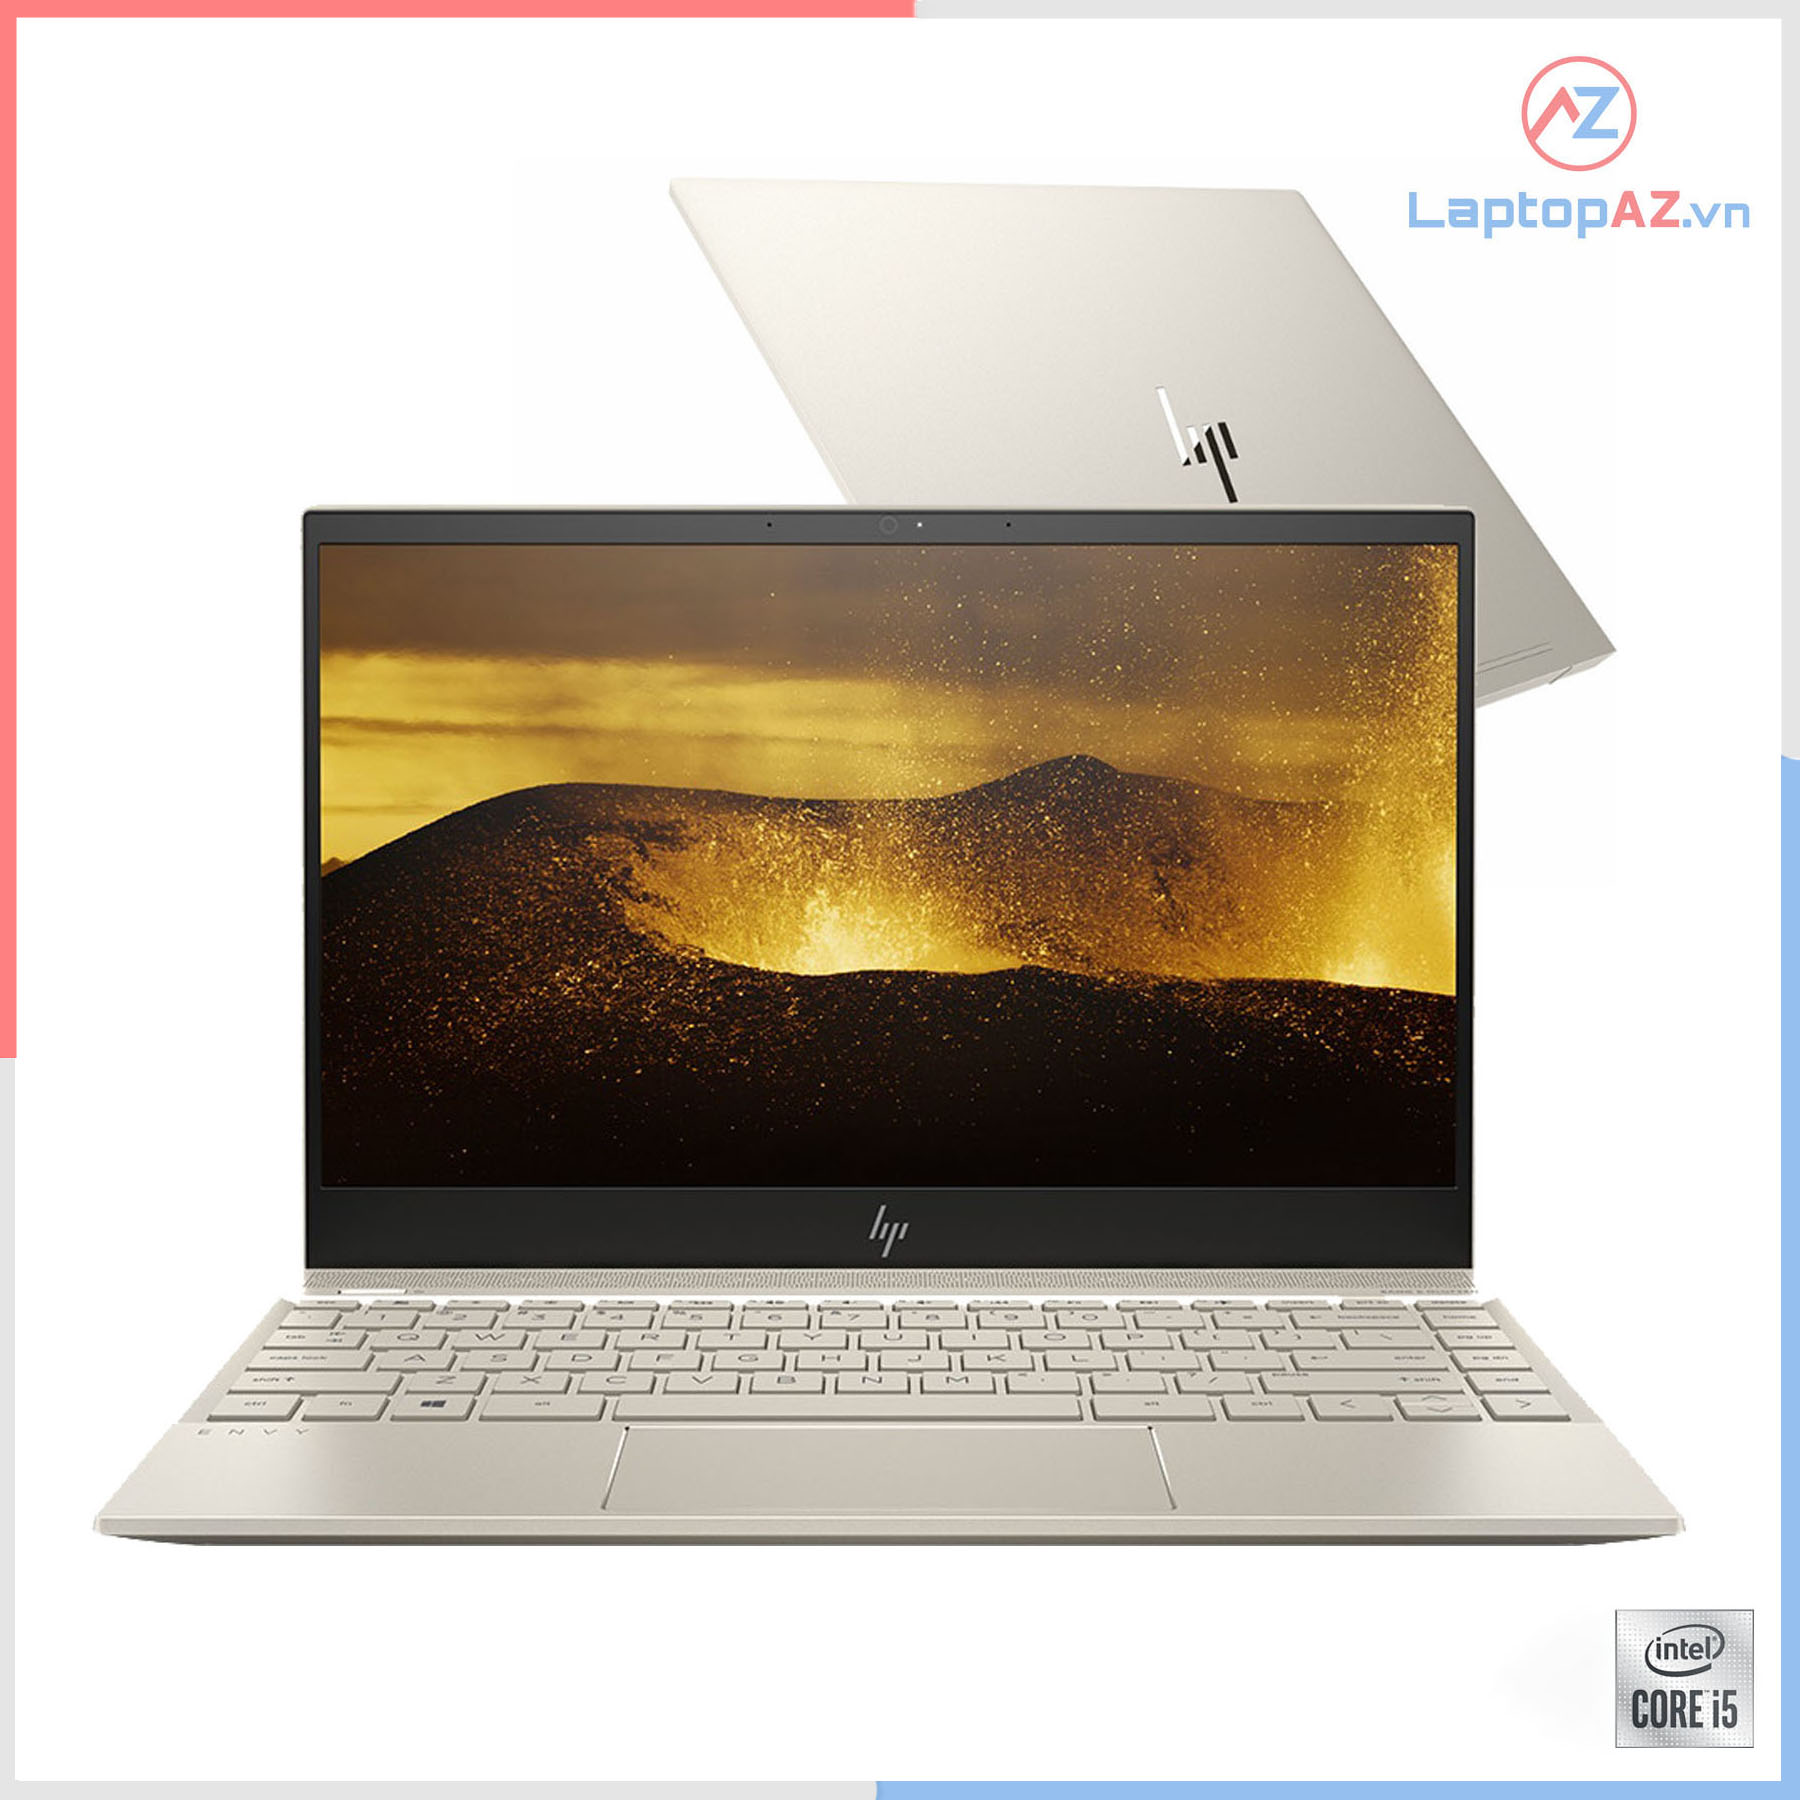 Laptop HP ENVY 13 (Core i5-7200U, 4GB, 256GB, VGA Intel UHD Graphics 620,13.3 inch FHD IPS)